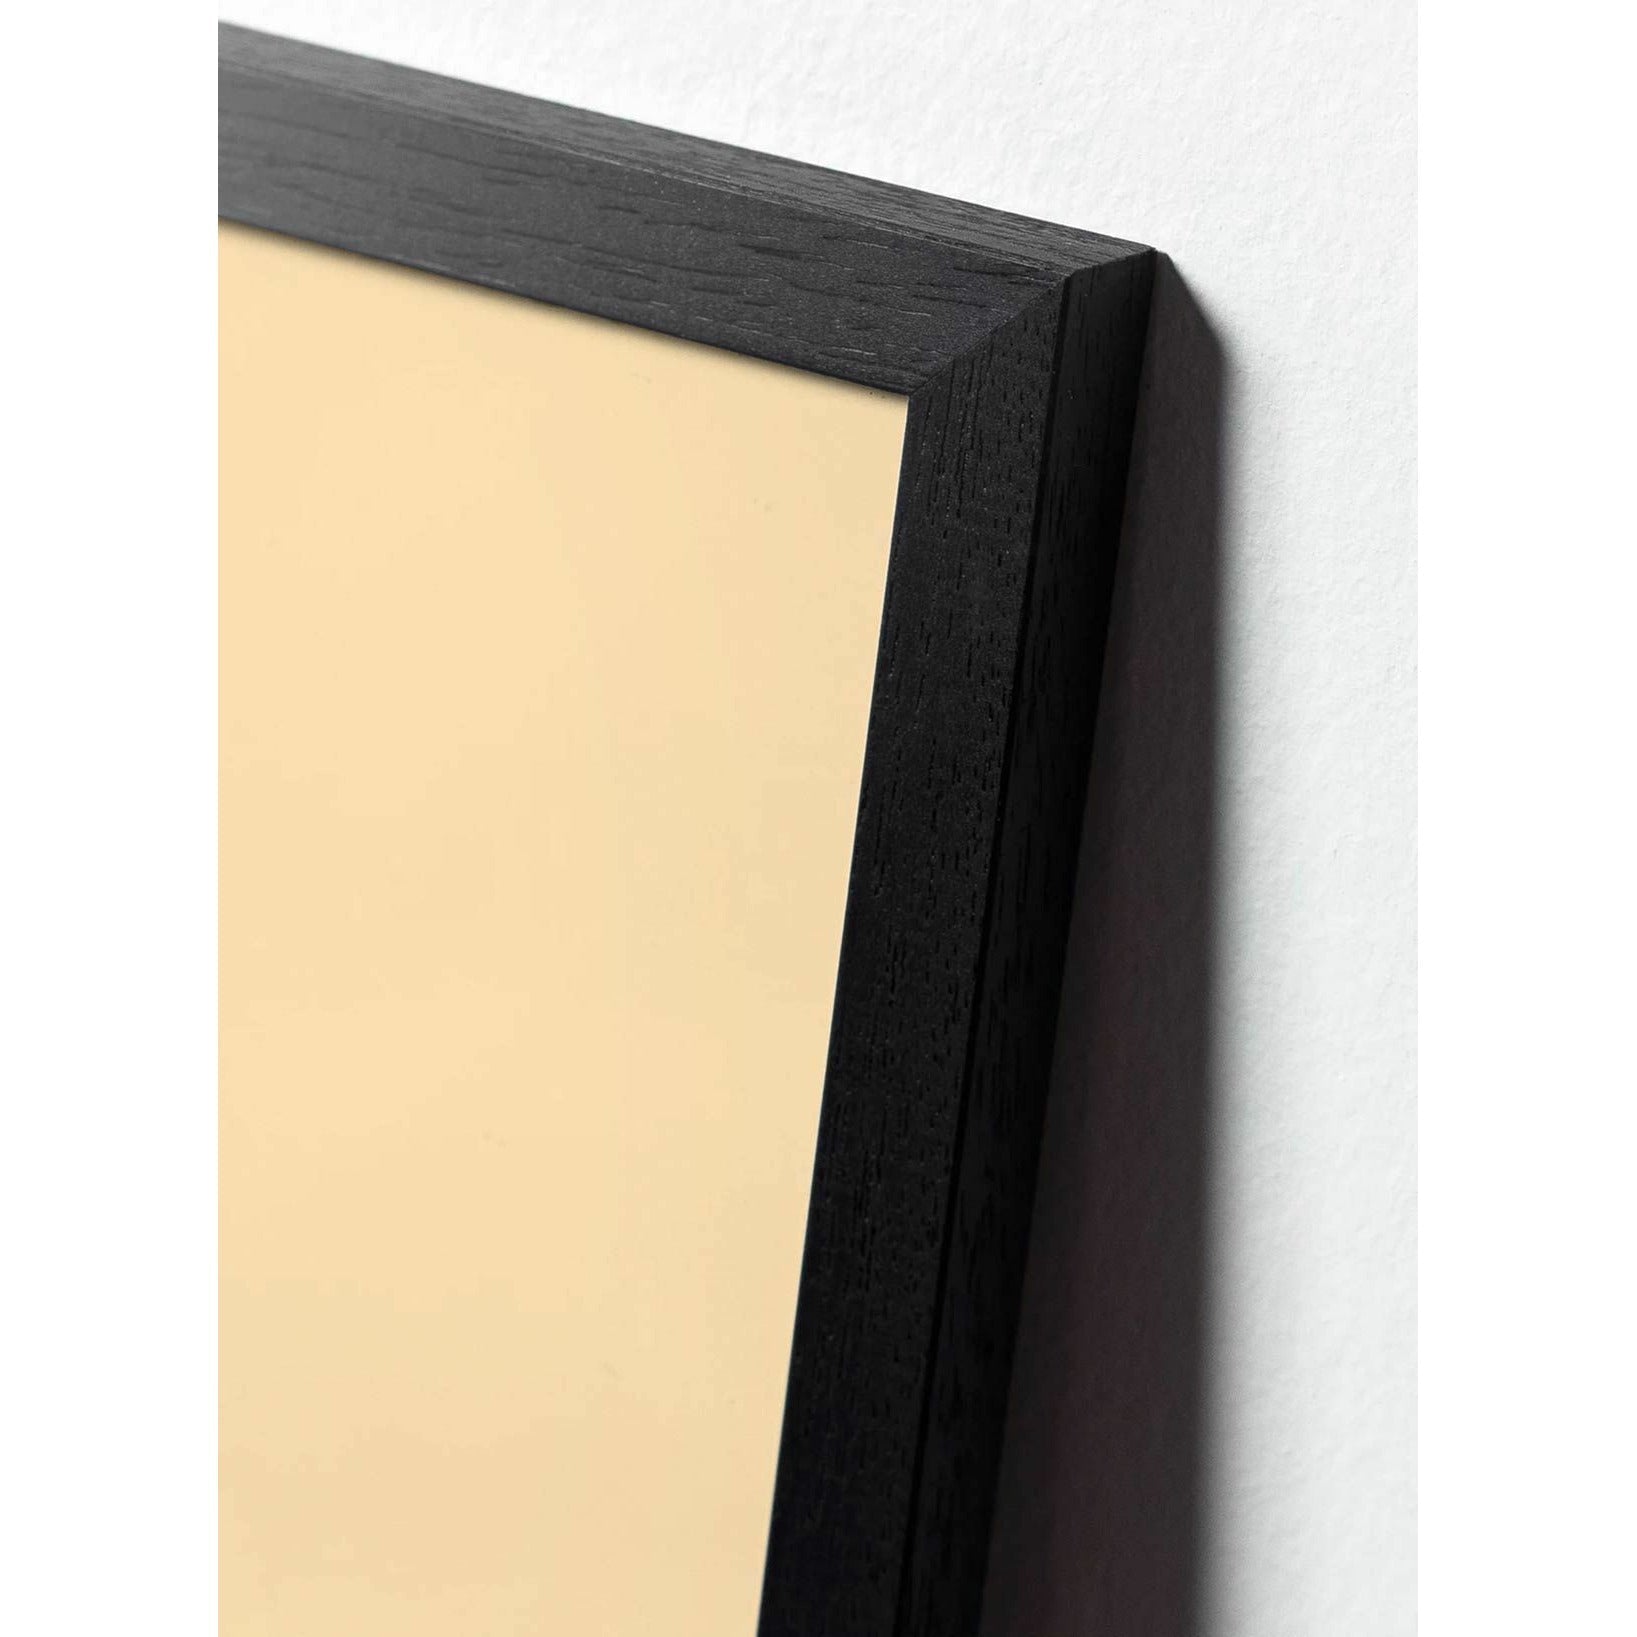 Póster de icono de diseño de creación, marco en madera lacada negra A5, color